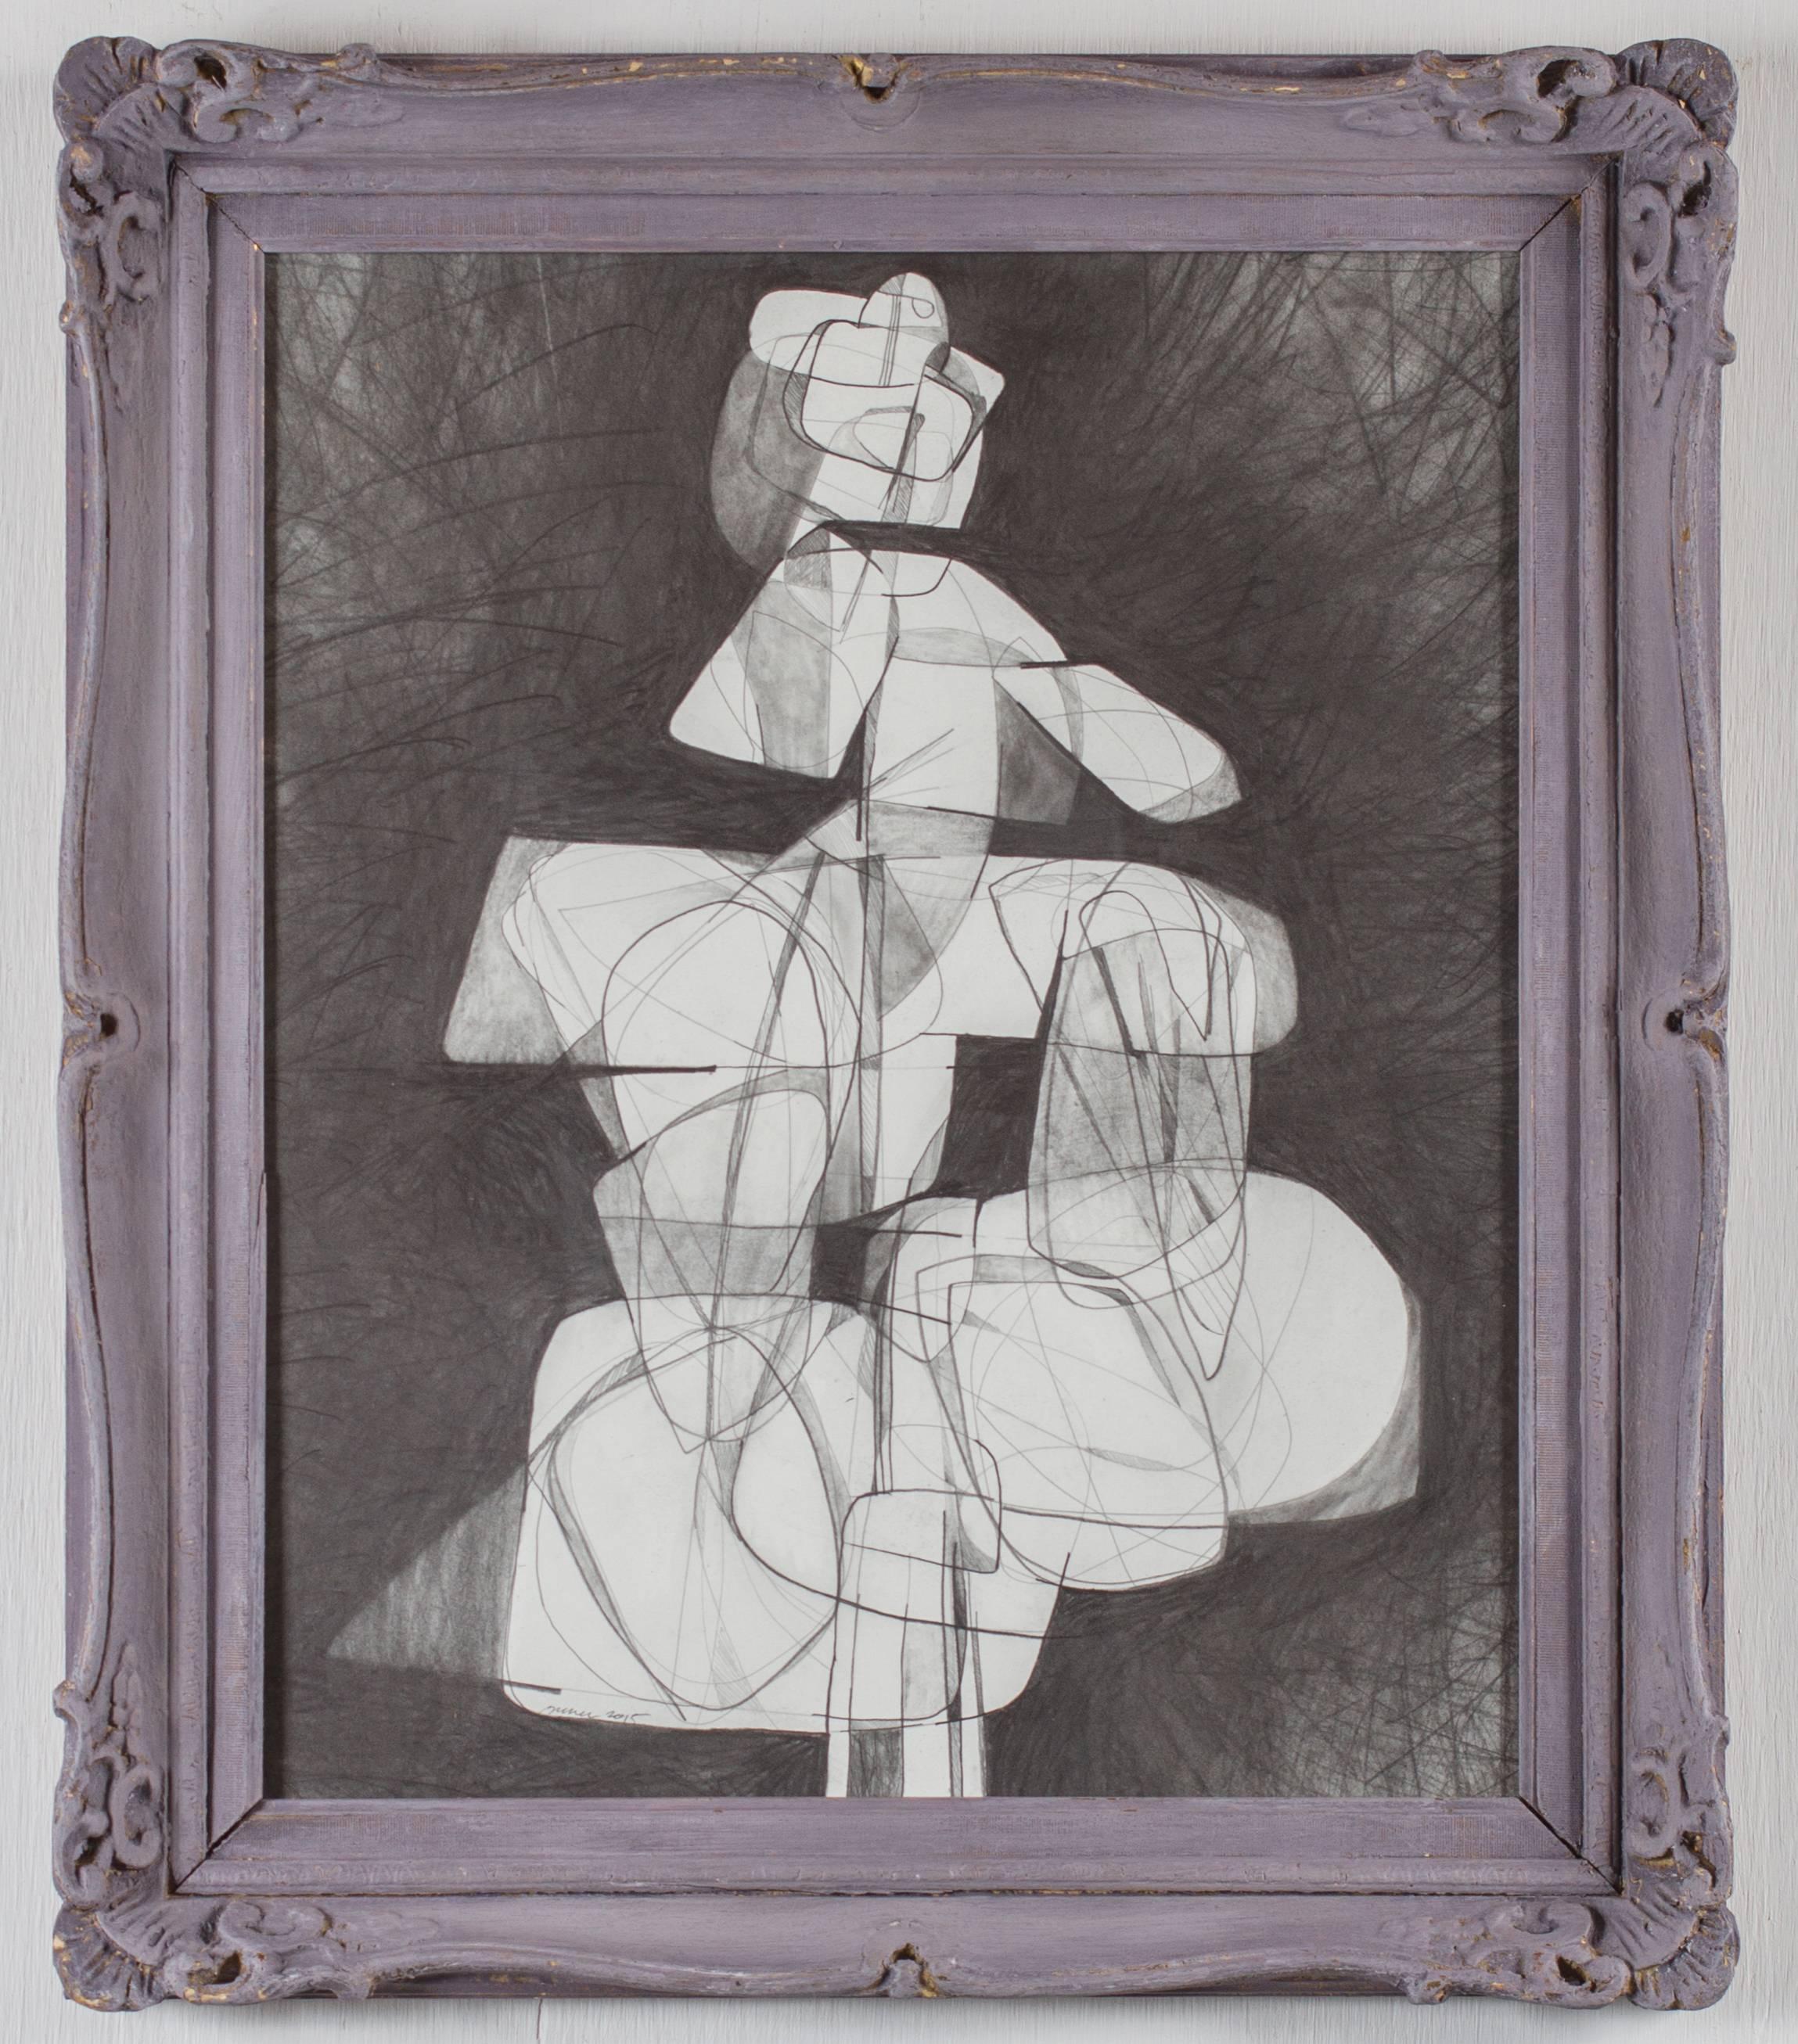 David Dew Bruner Figurative Art - Totem Infanta XVII (Abstract Cubist Style Graphite Drawing in Vintage Frame)